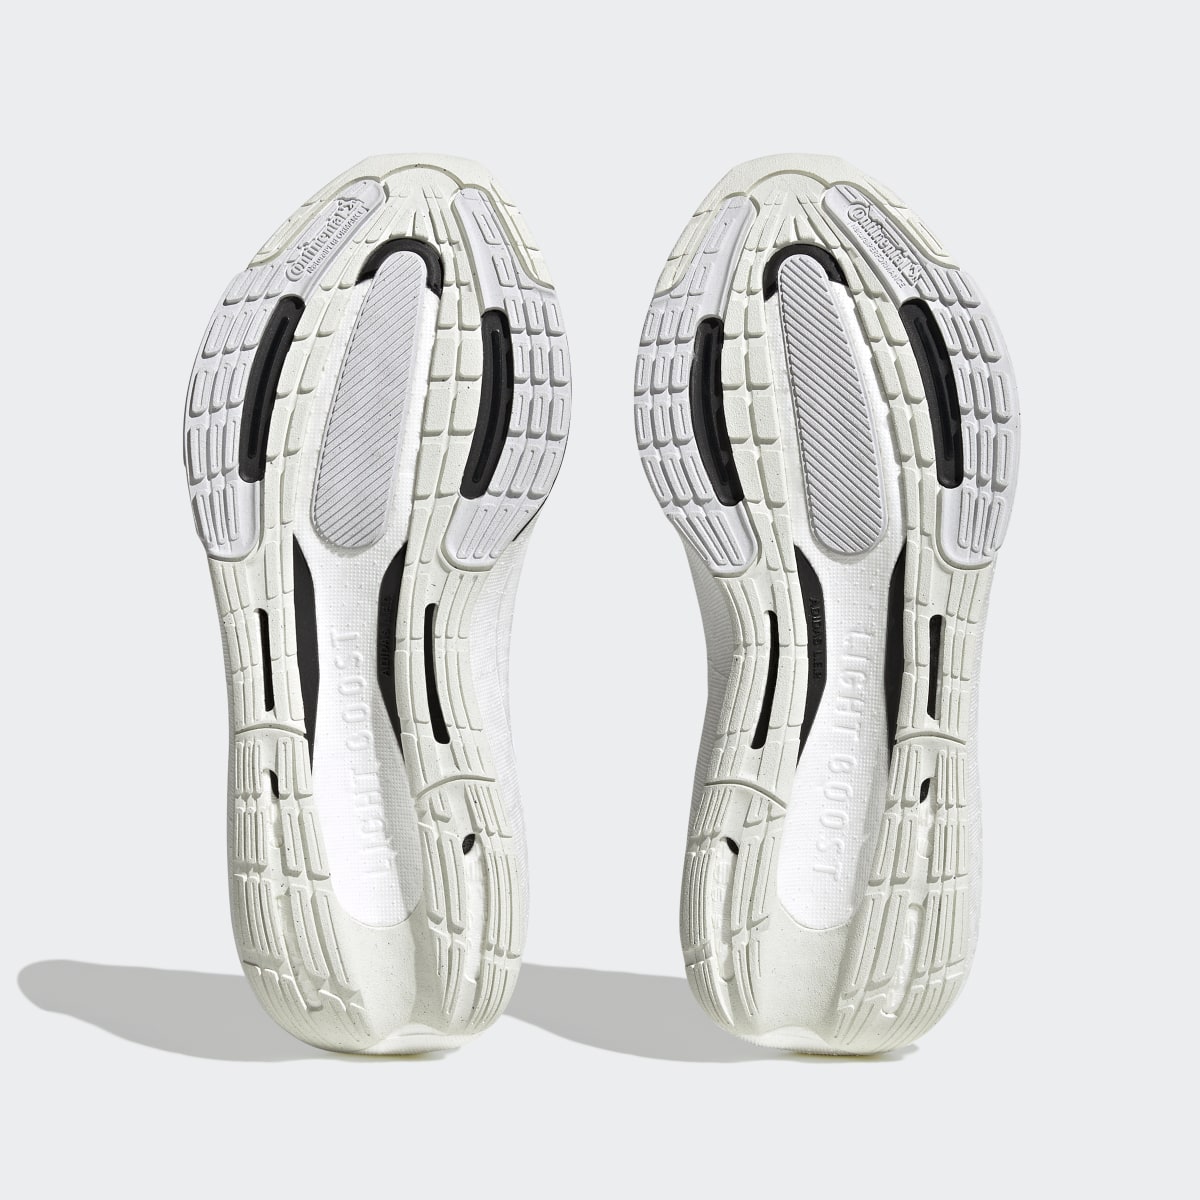 adidas by Stella McCartney Ultraboost Light Shoes - White | adidas Canada